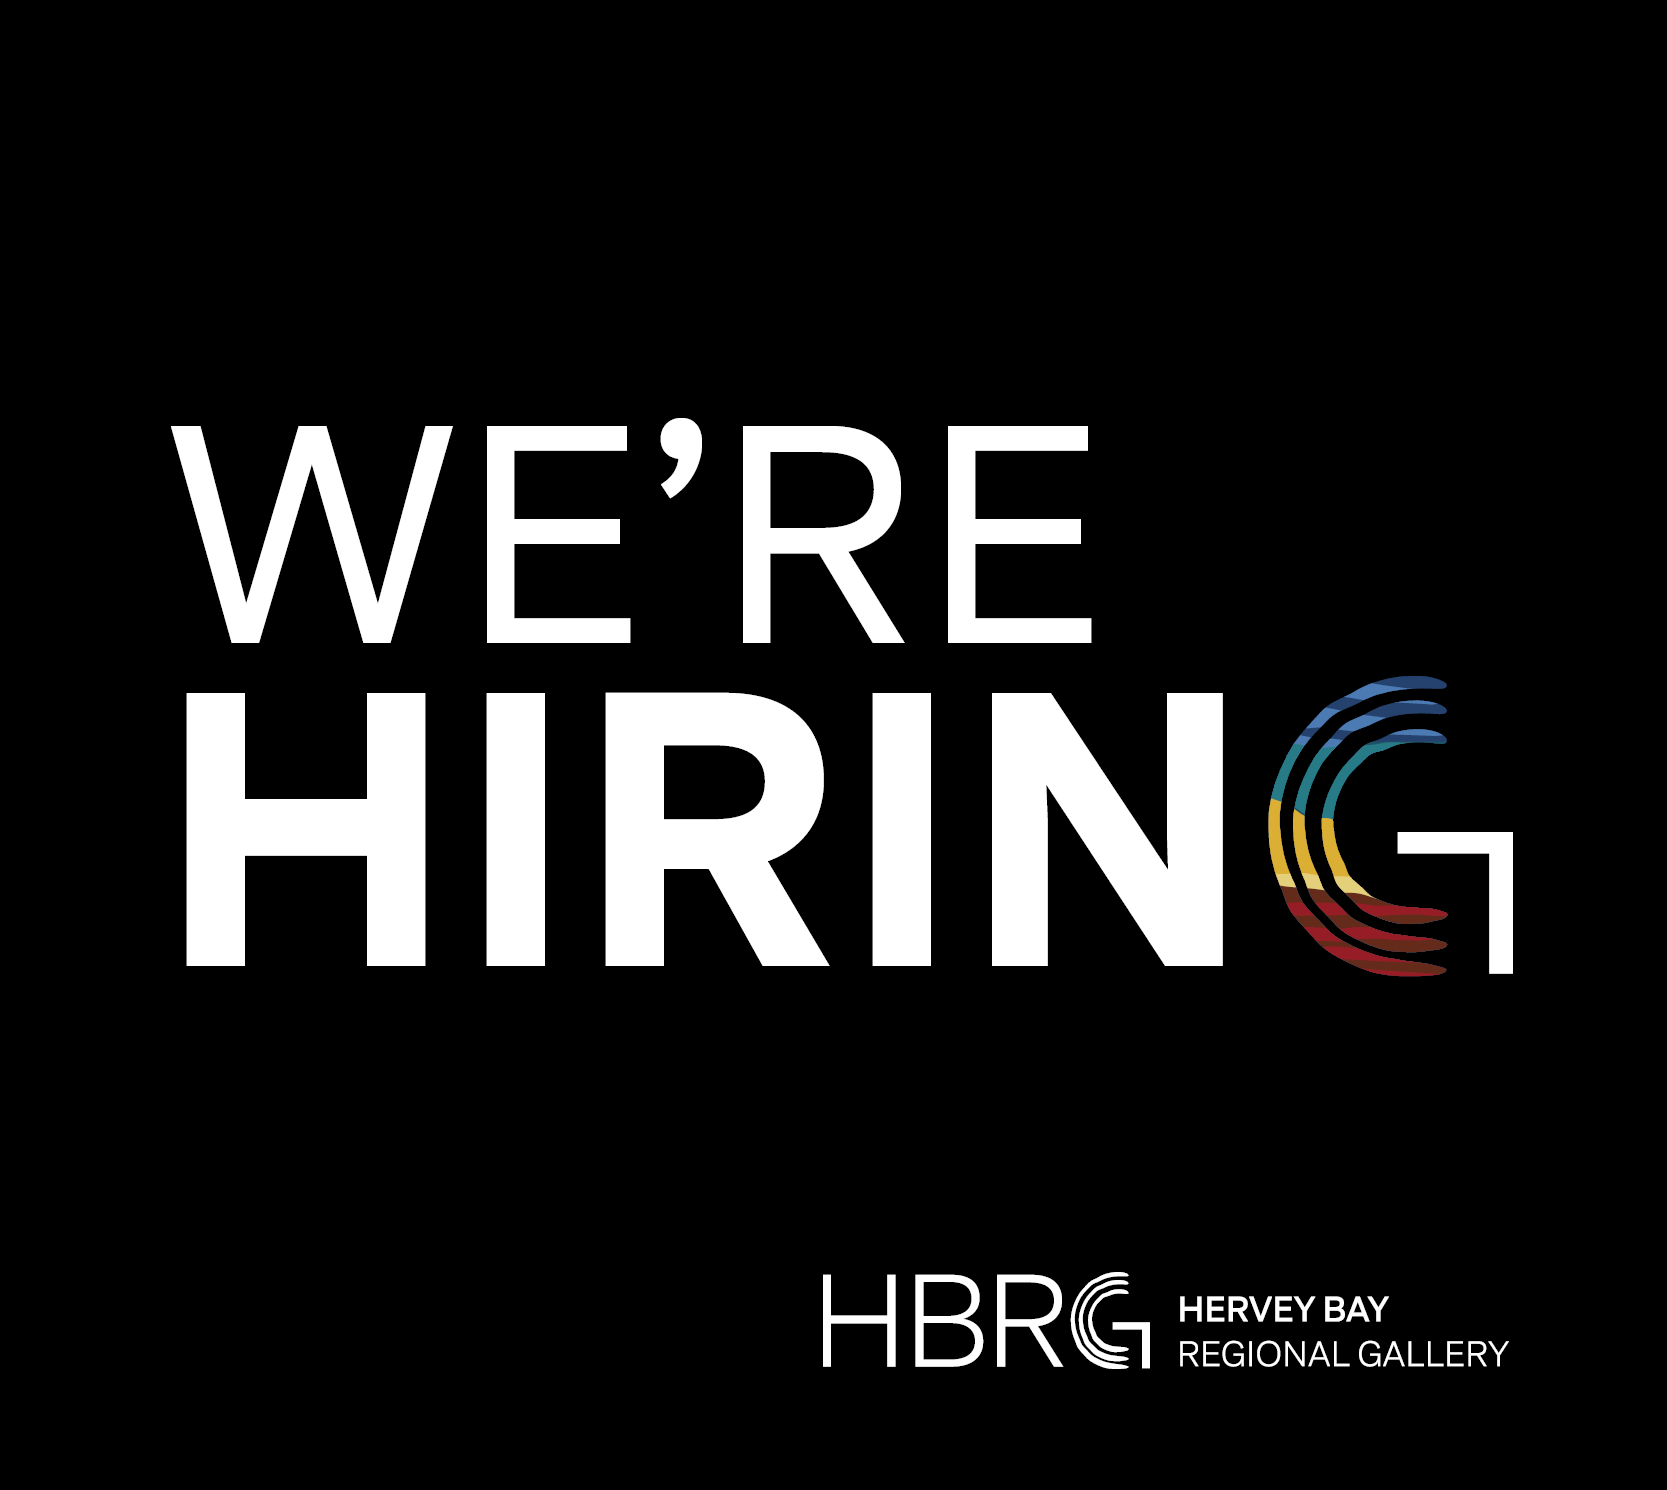 Hervey Bay Regional Gallery currently has three job opportunities.